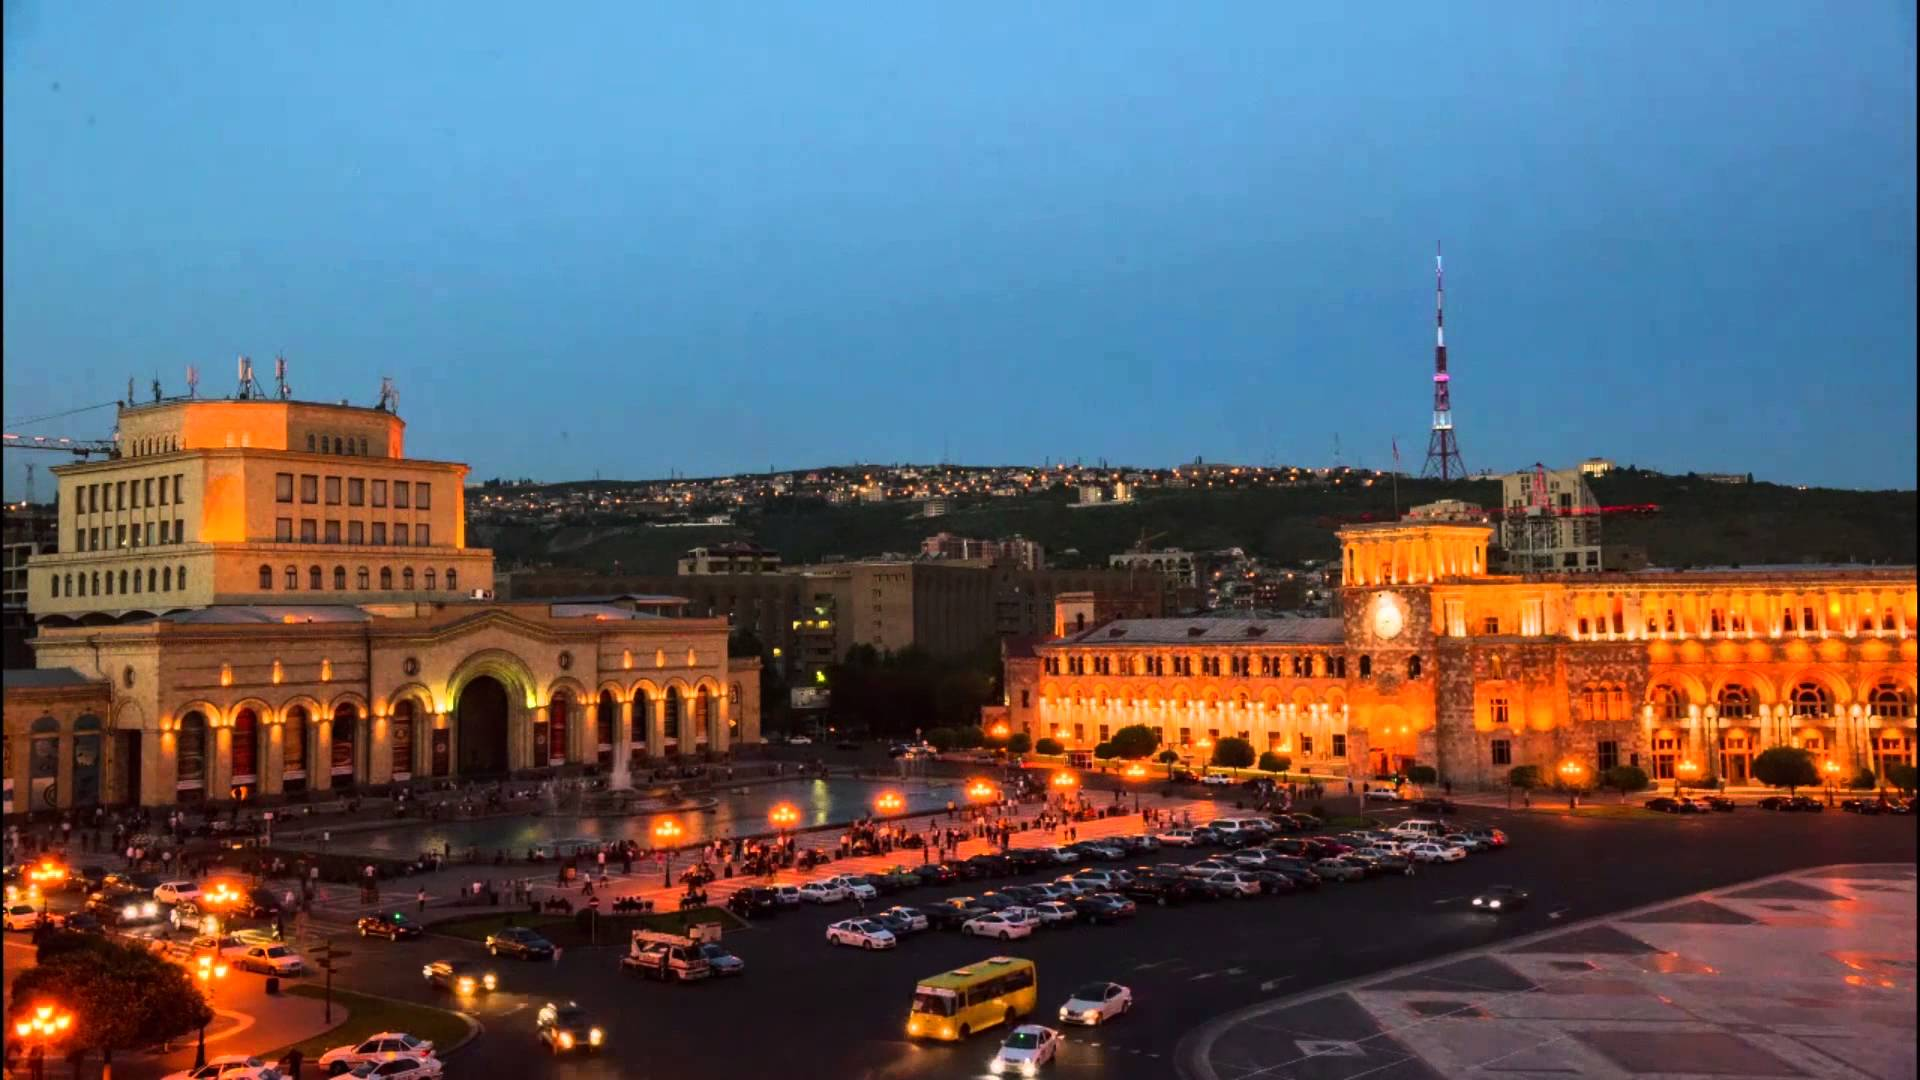 Чей ереван. Площадь Республики Ереван. Площадь революции Ереван. Армения Ереван площадь Республики. Площадь независимости Ереван.